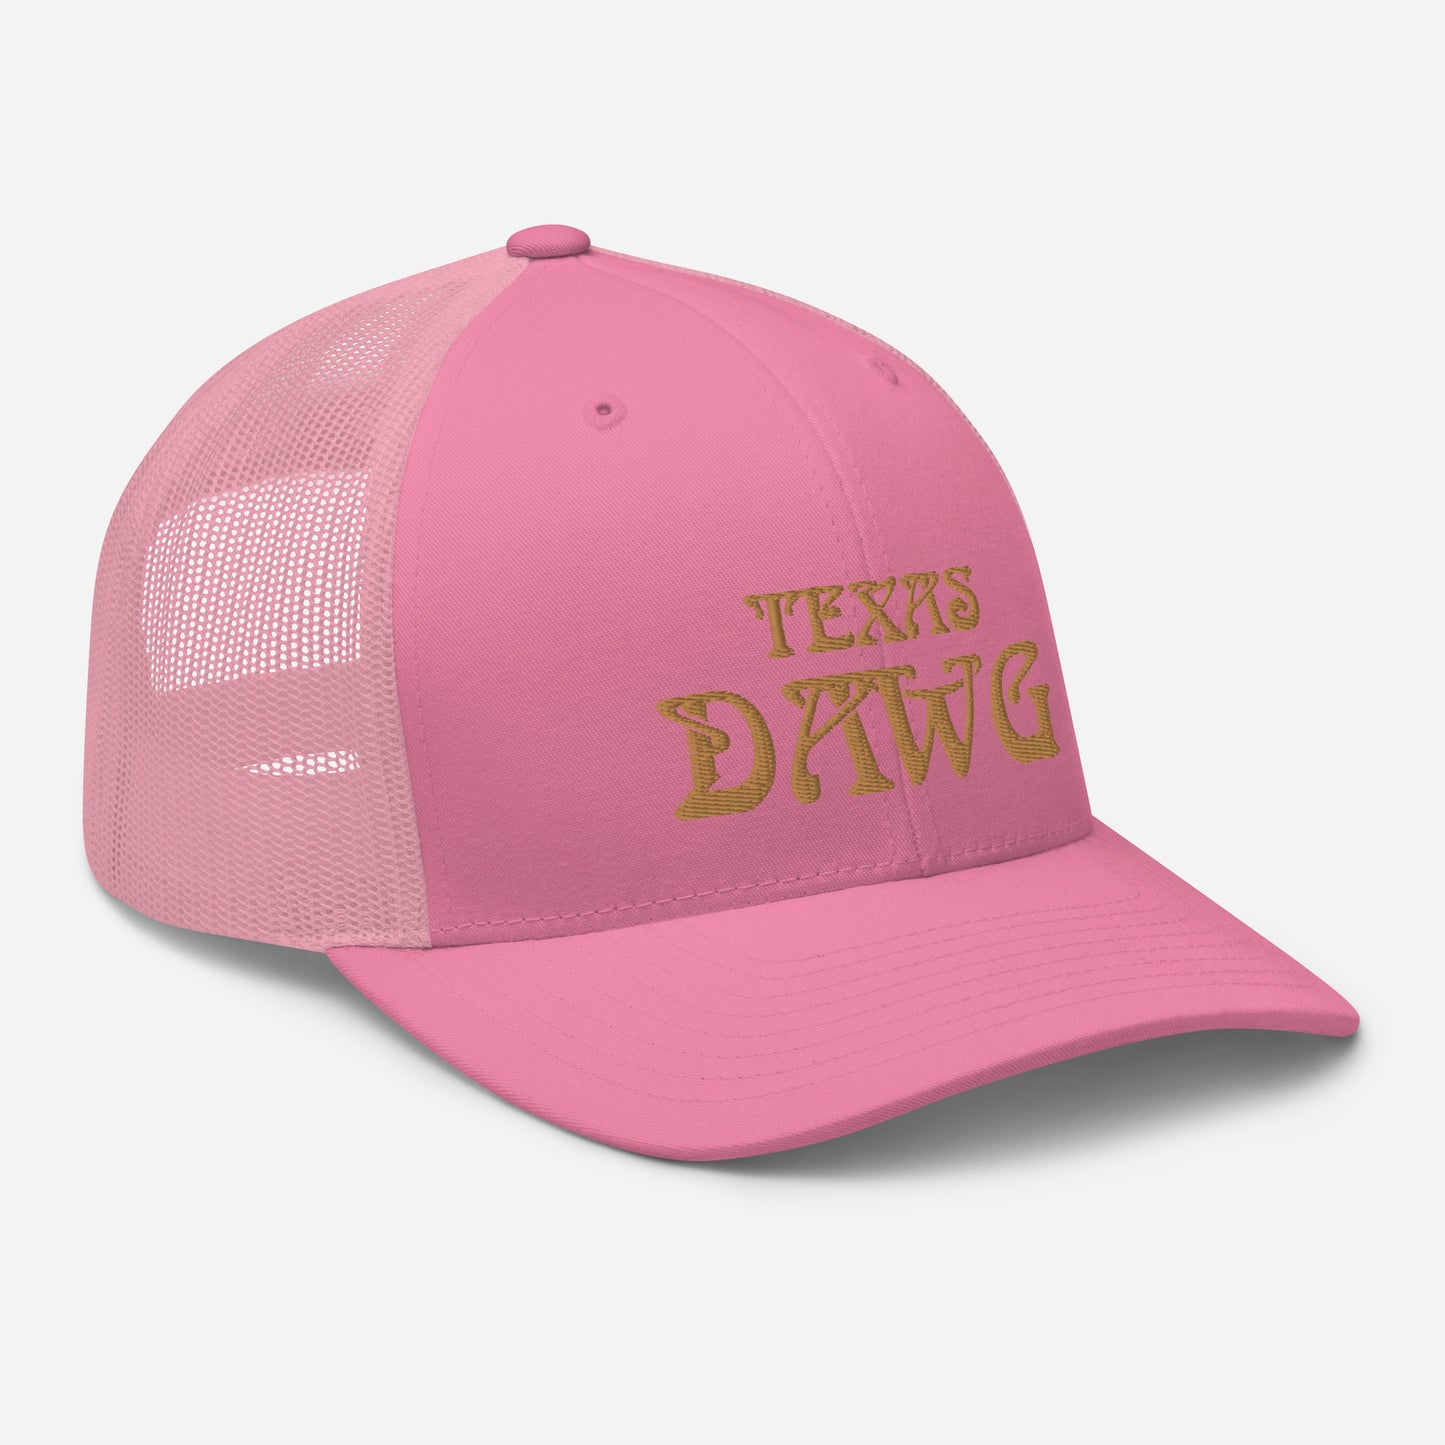 Texas Dawg Funny Trucker Cap